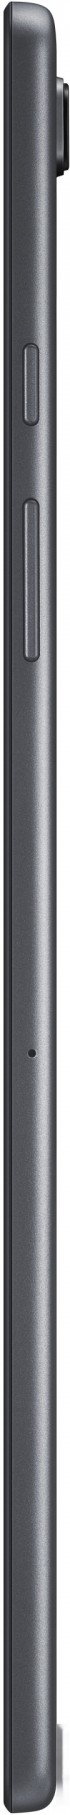 Планшет Samsung Galaxy Tab A7 32GB LTE / SM-T505NZAASER (темно-серый)